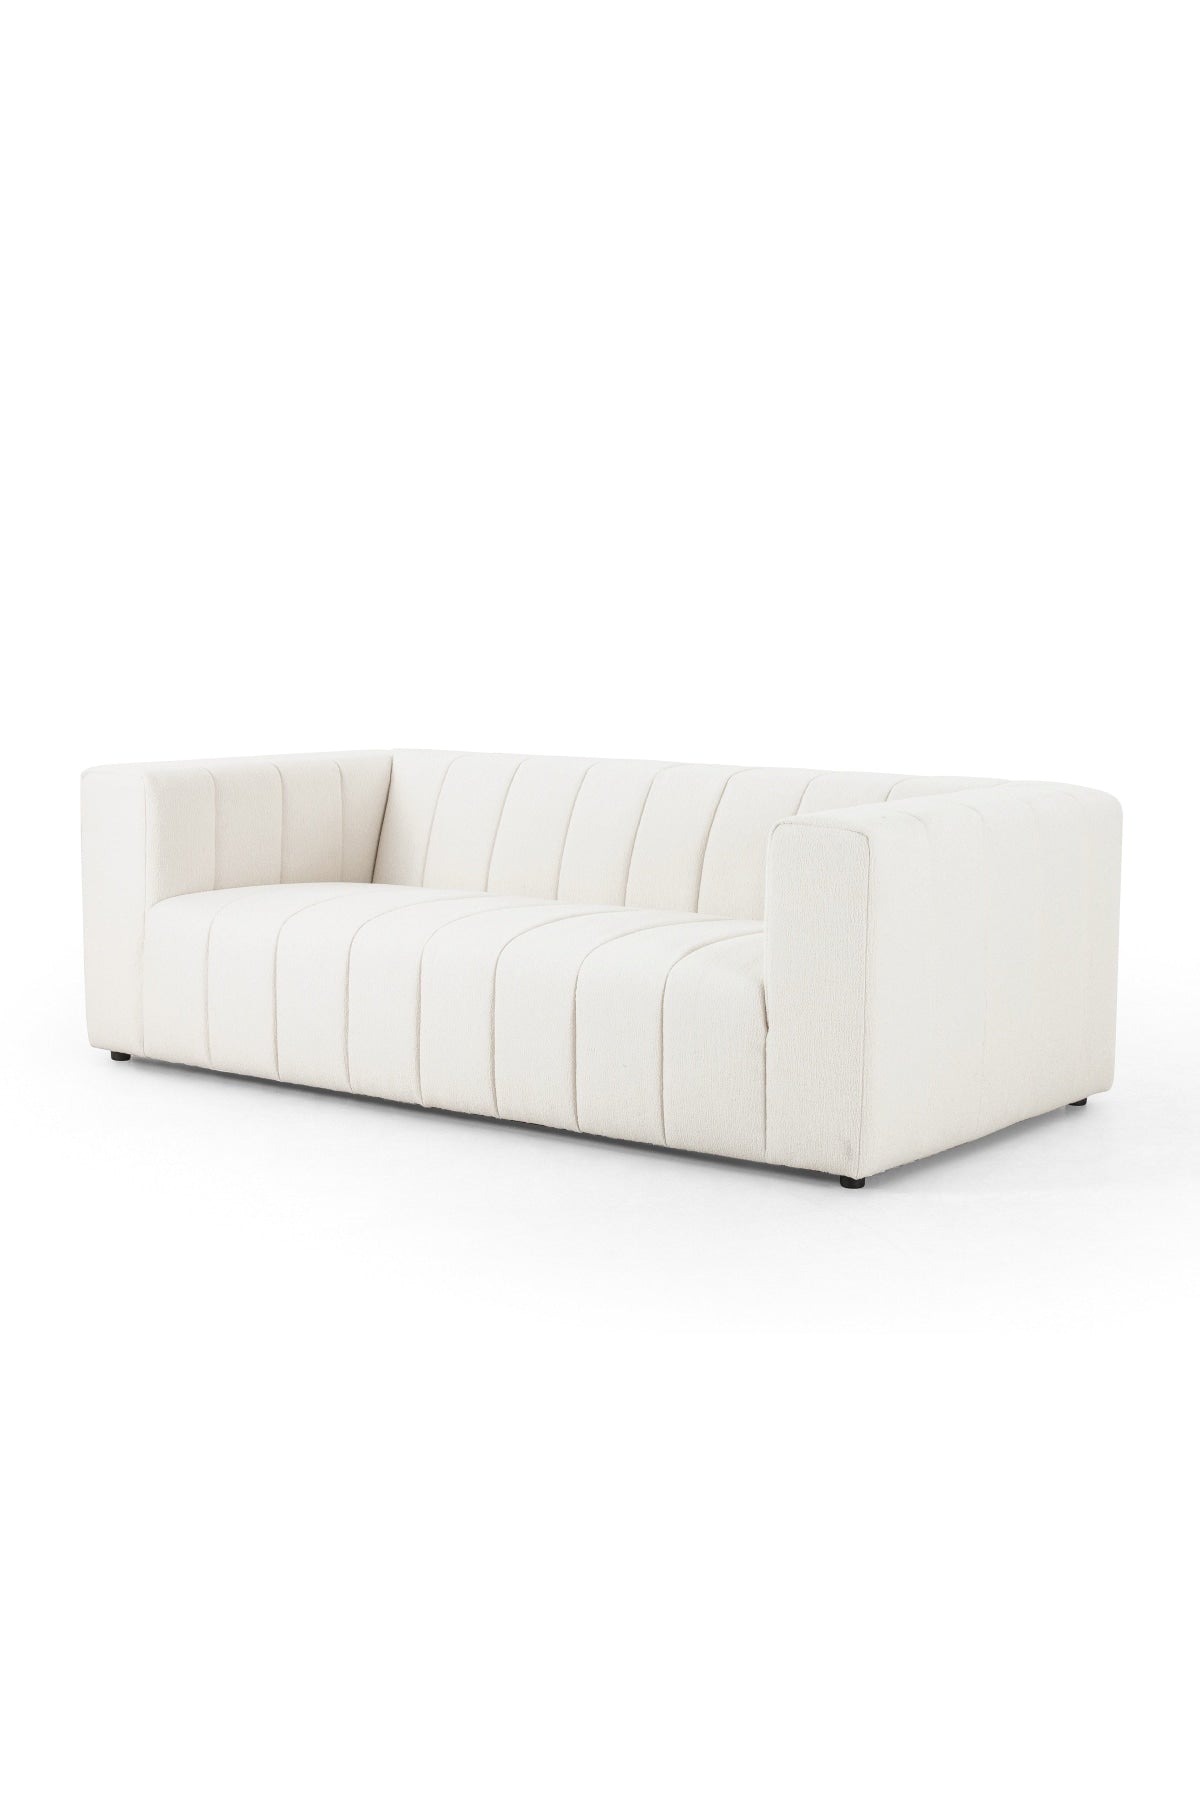 Napa Sofa - 2 Colors and Sizes